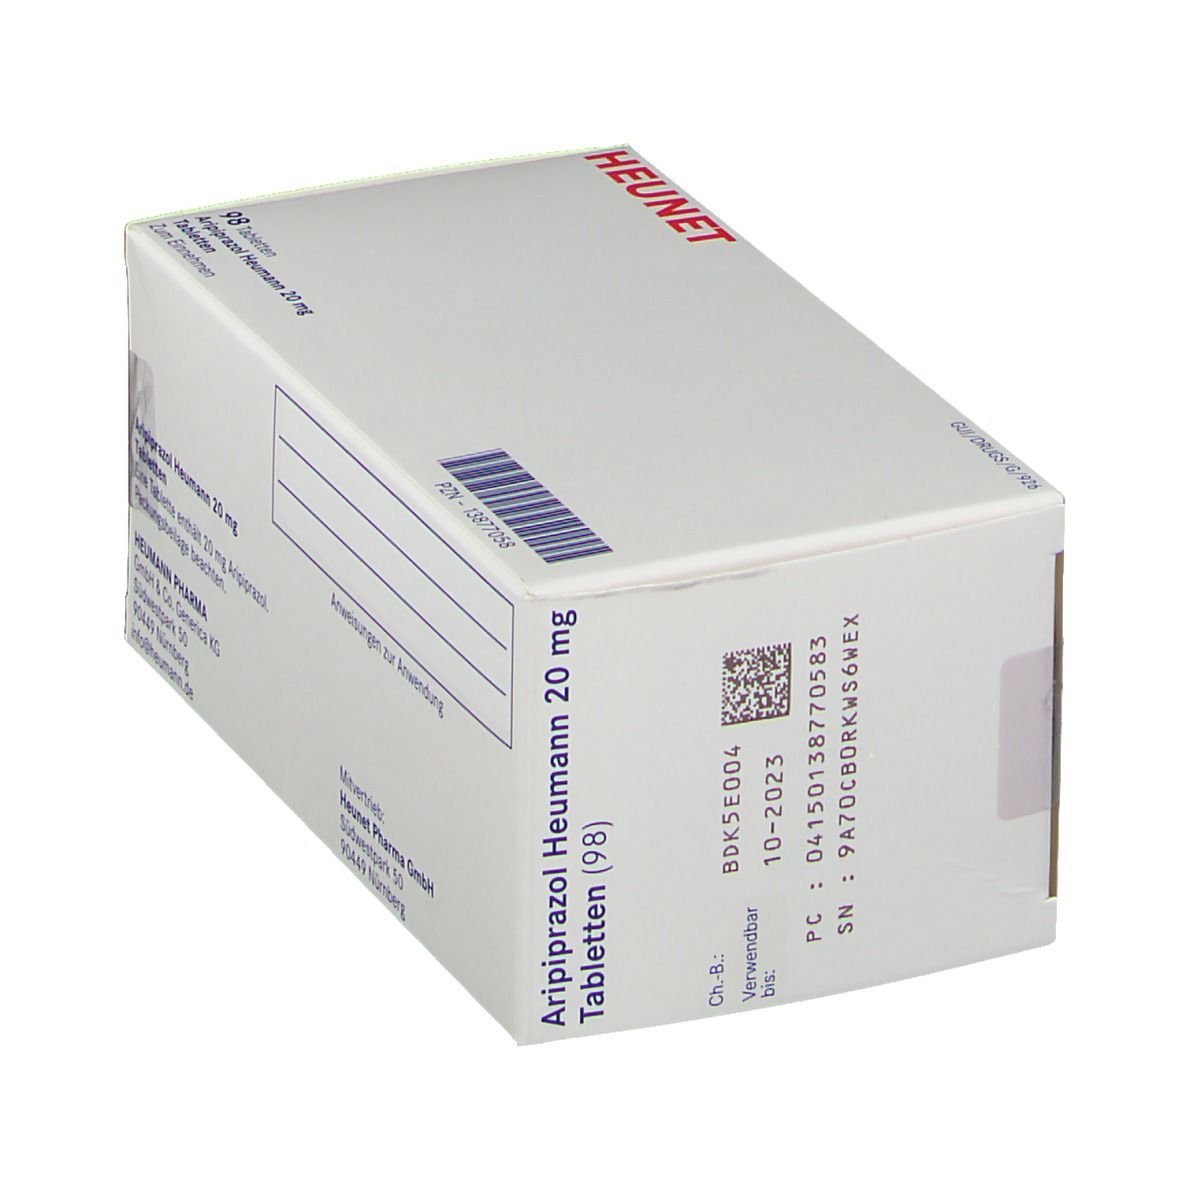 Aripiprazol Heumann 20 mg